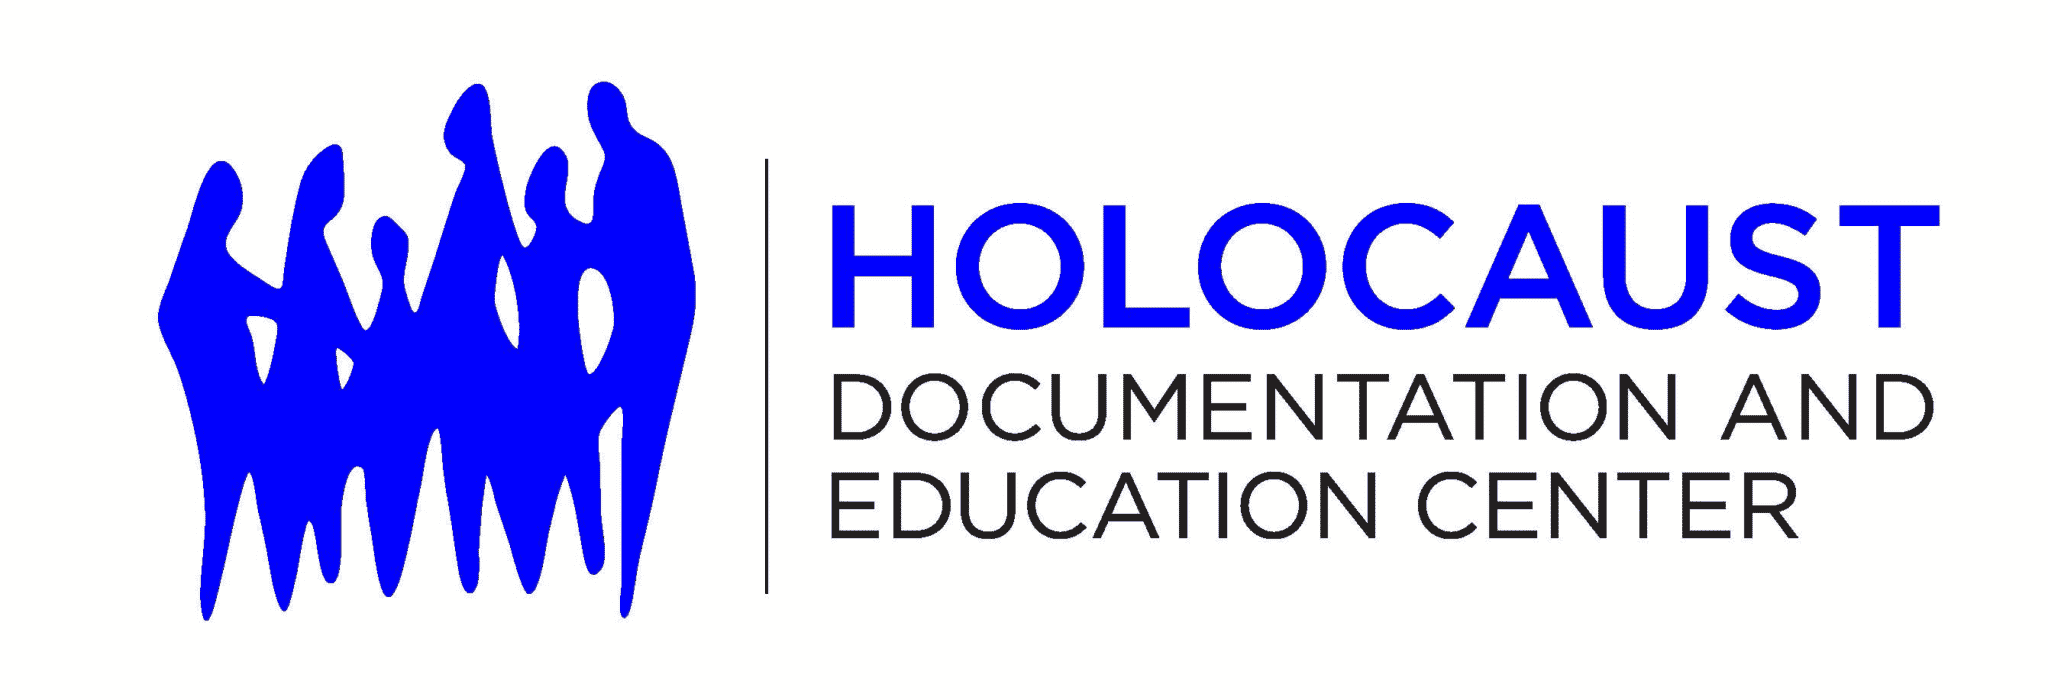 Holocaust Documentation and Education Center, Inc.